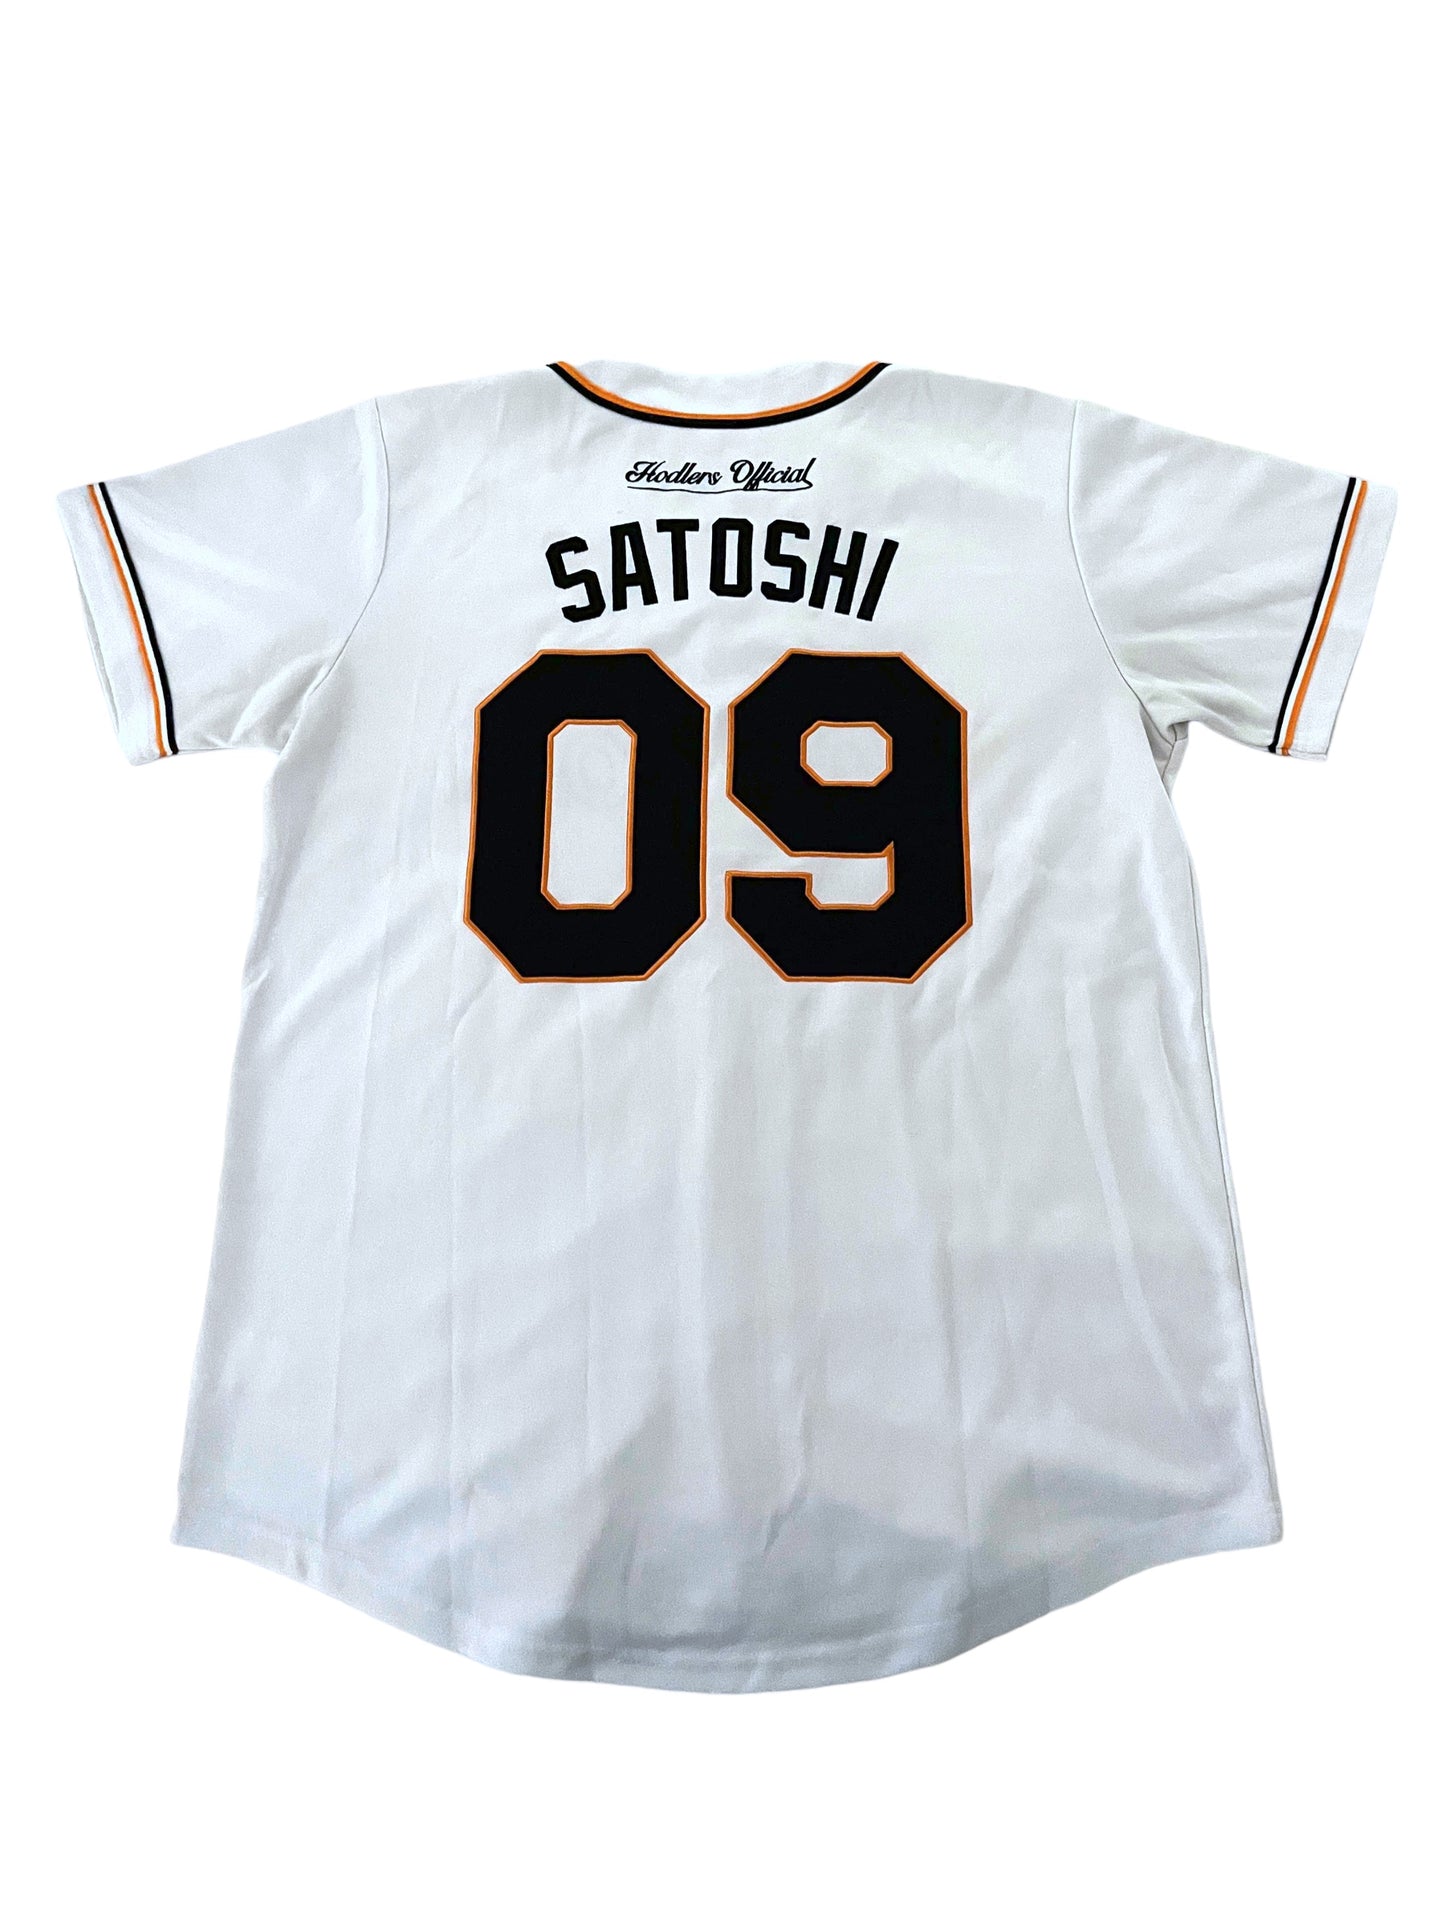 Team Bitcoin Baseball Jersey White 09 Satoshi Nakamoto Hodlers Official